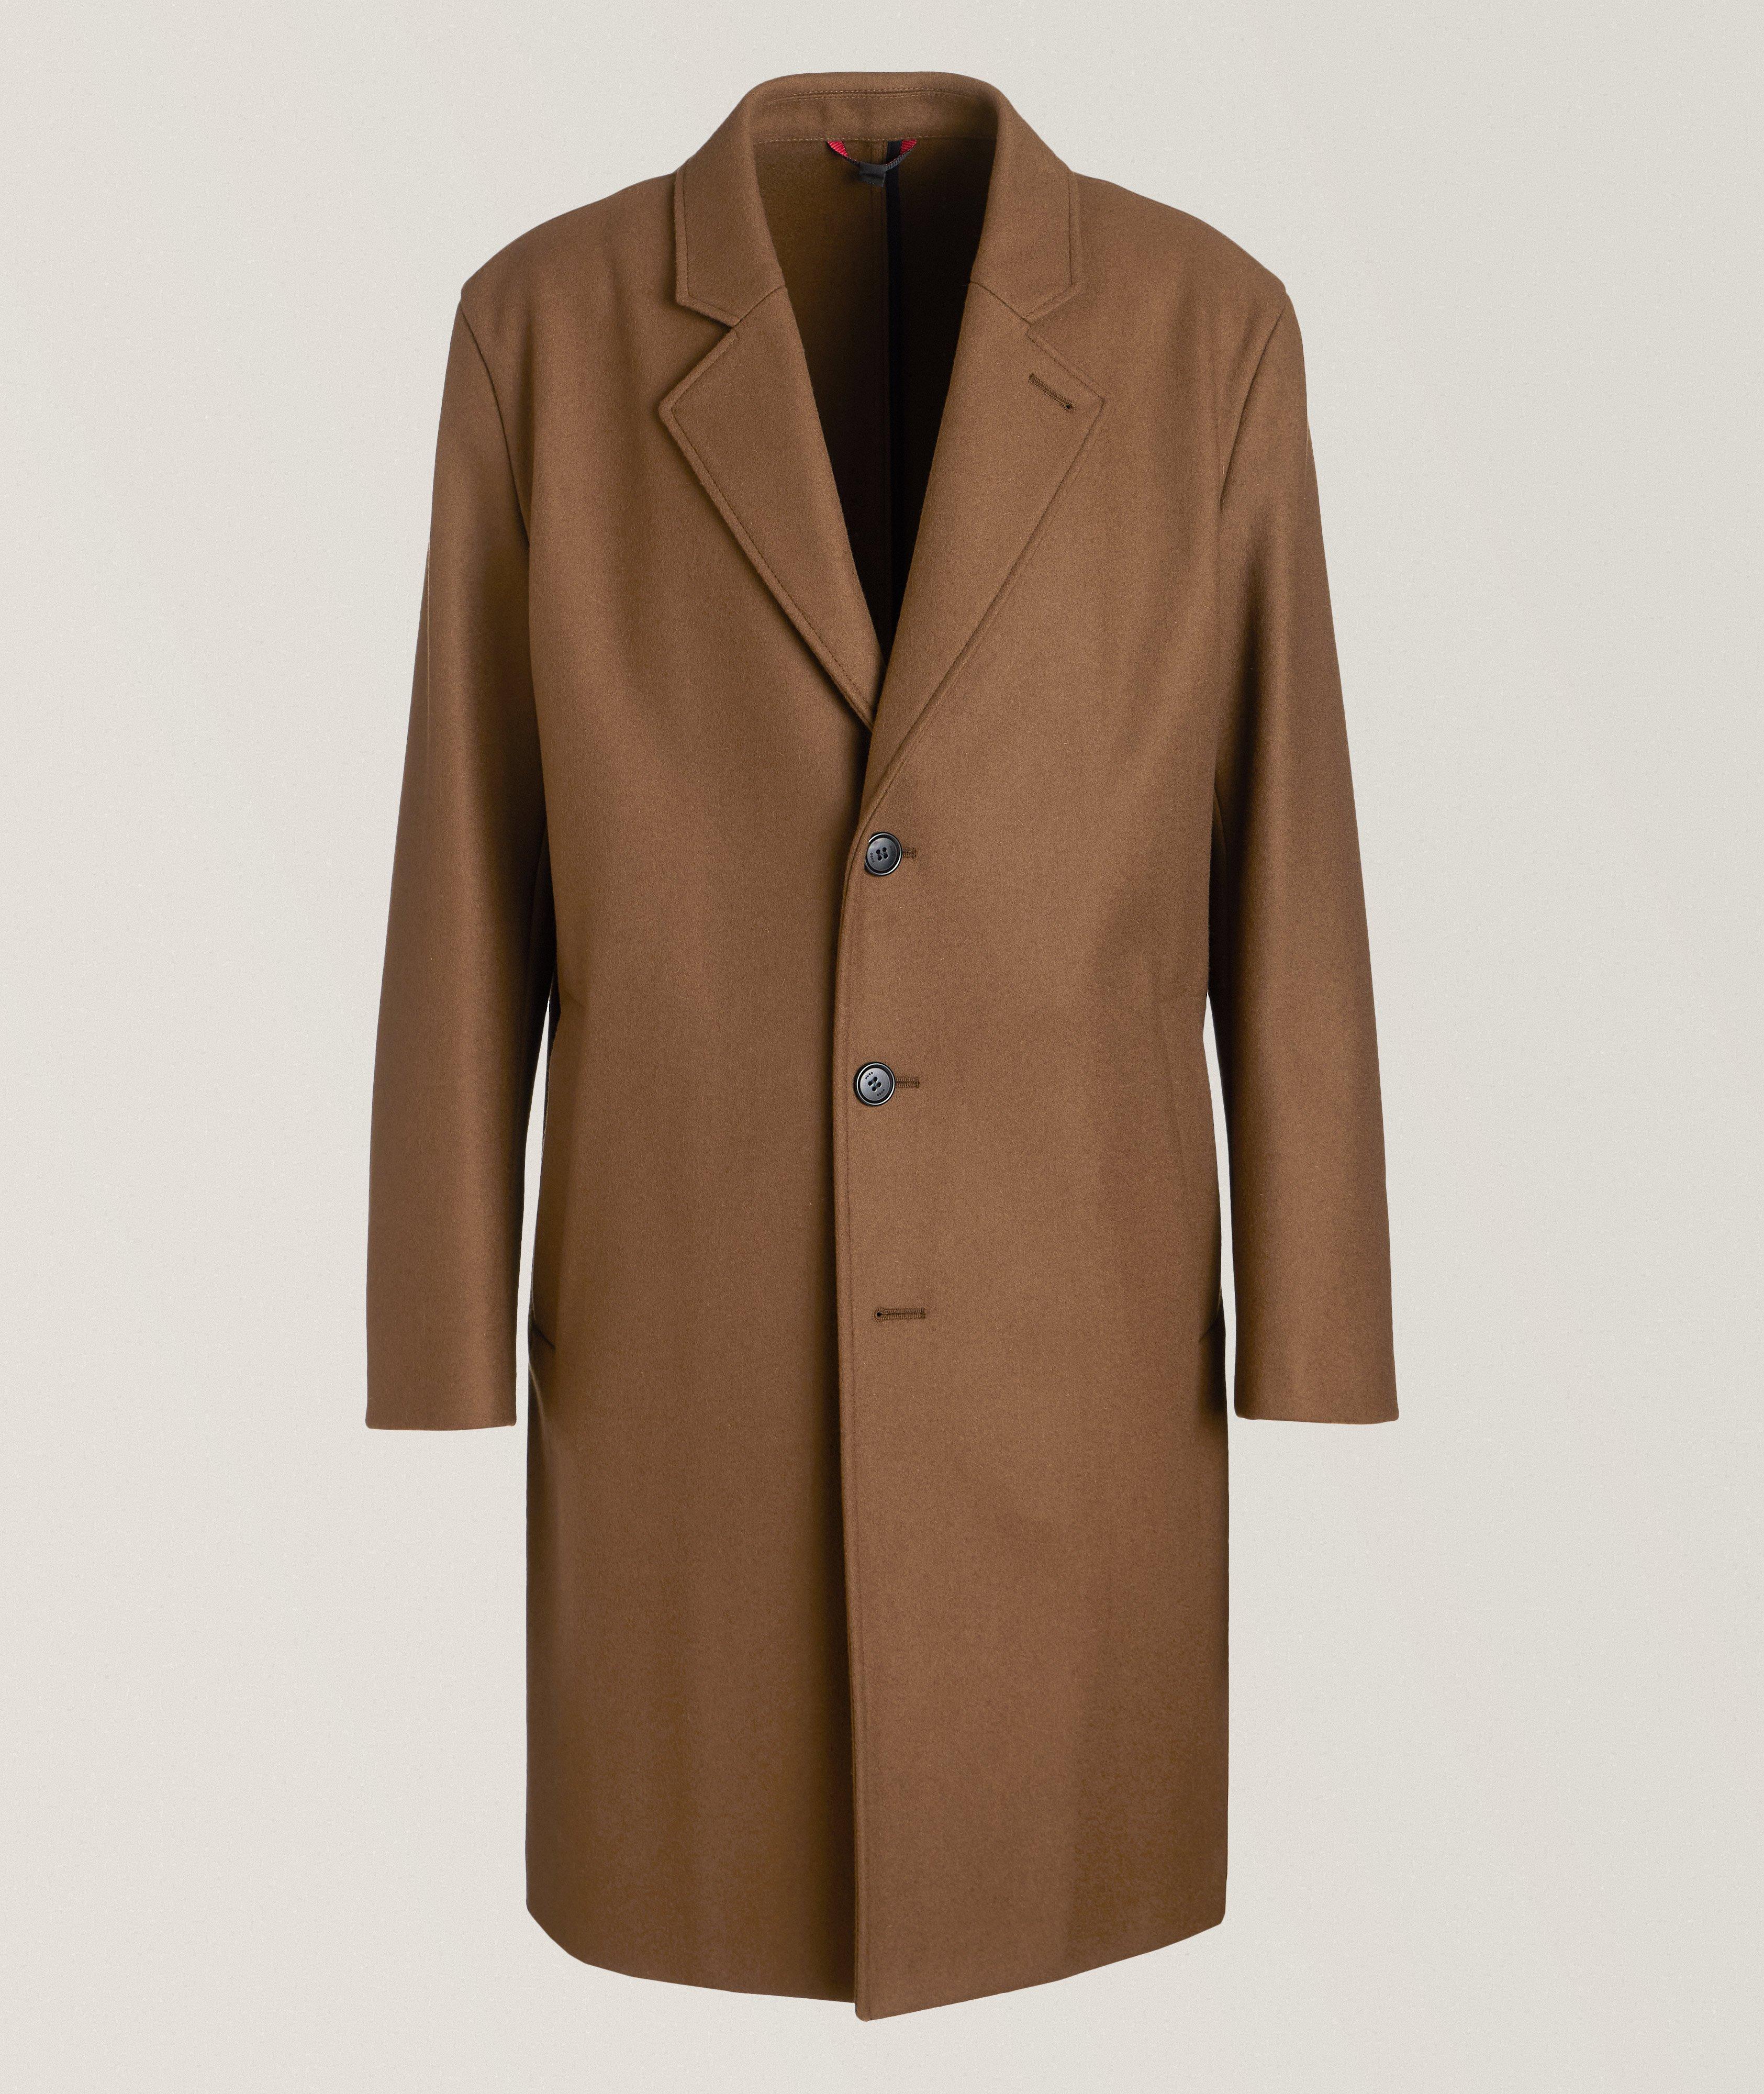 Malox Wool-Blend Overcoat image 0